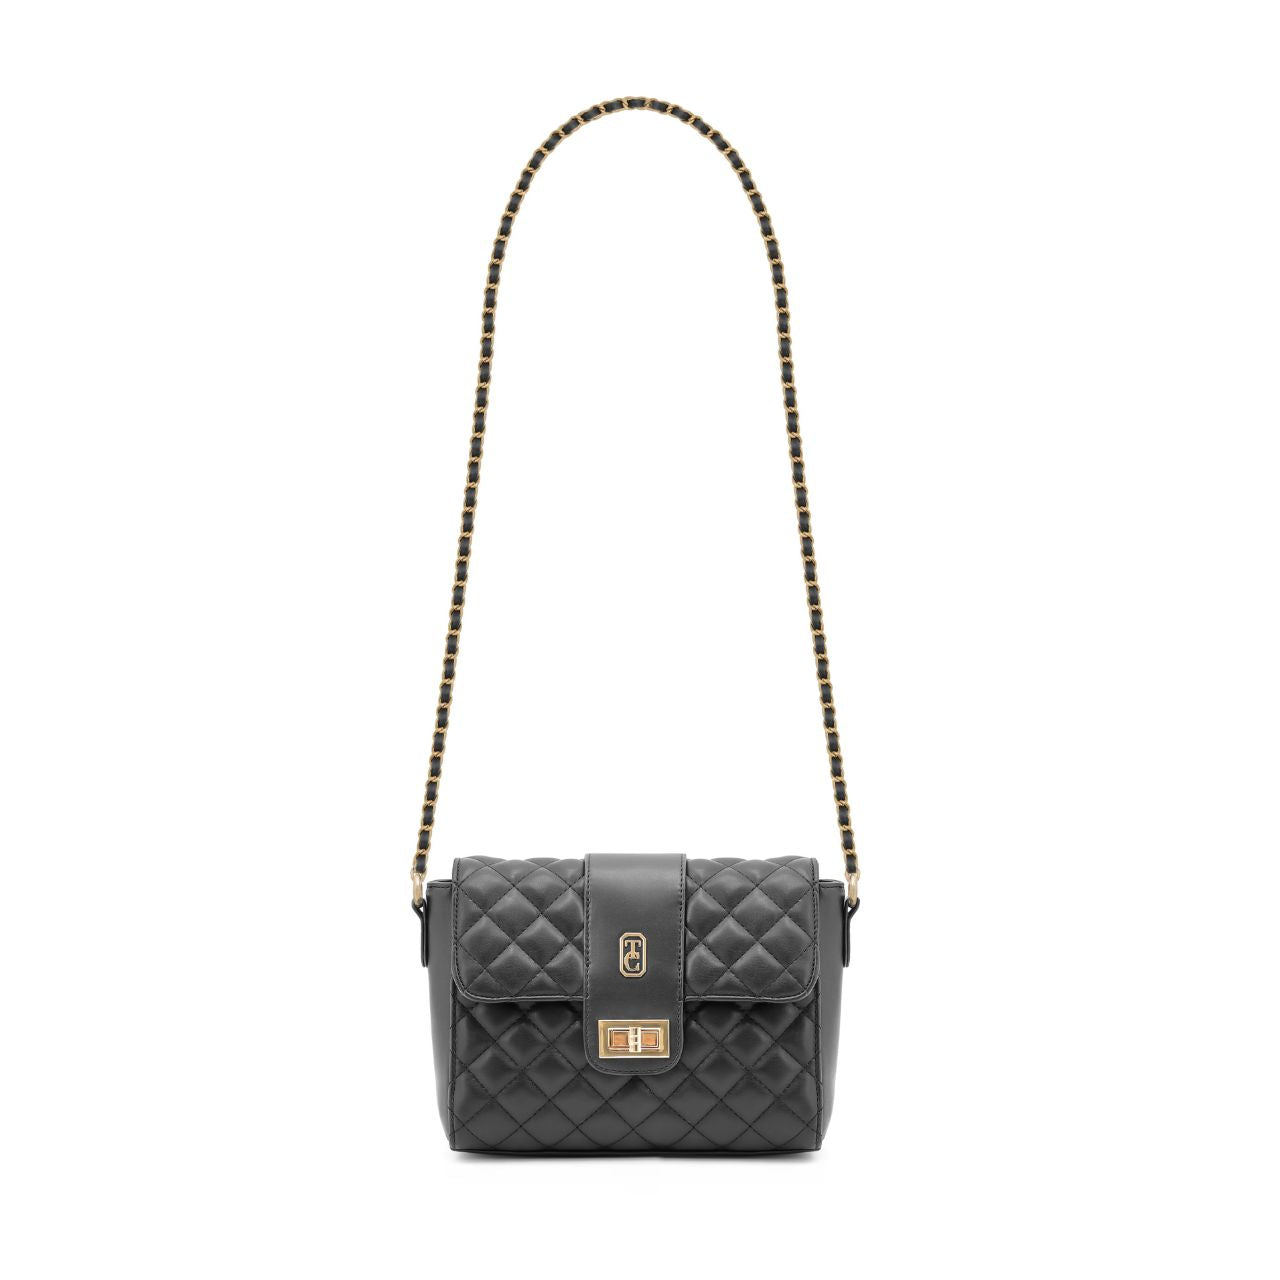 Bella Handbag - Black by Tipperary Crystal  Bella Handbag - Black